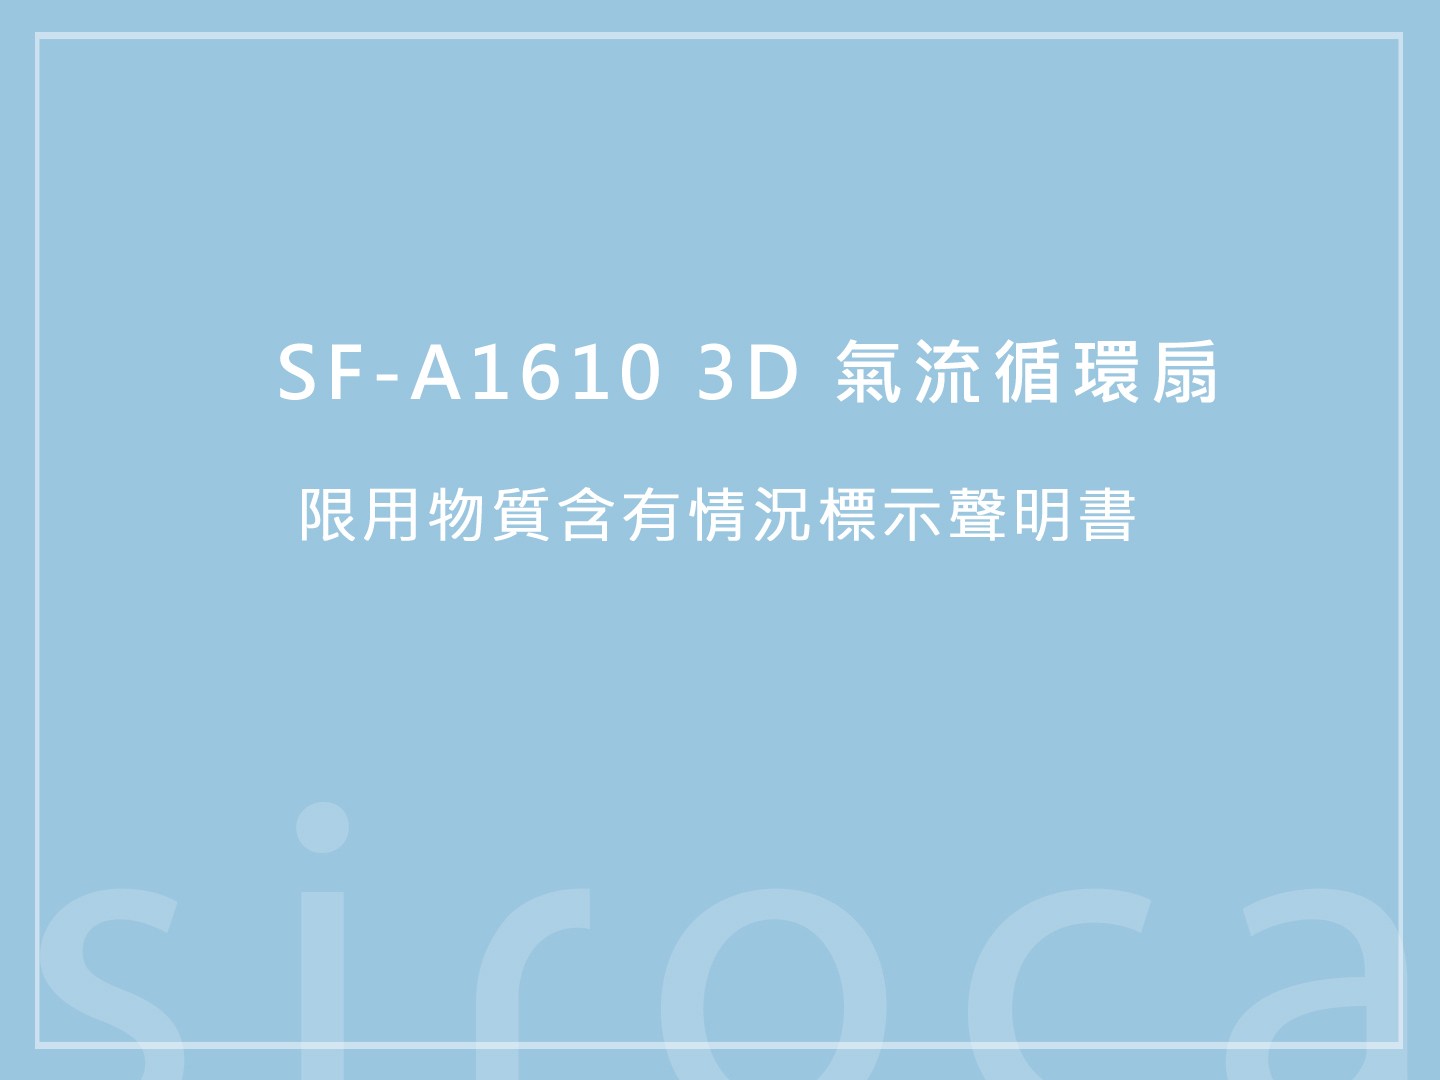 SF-A1610 3D 氣流循環扇 限用物質含有情況標示聲明